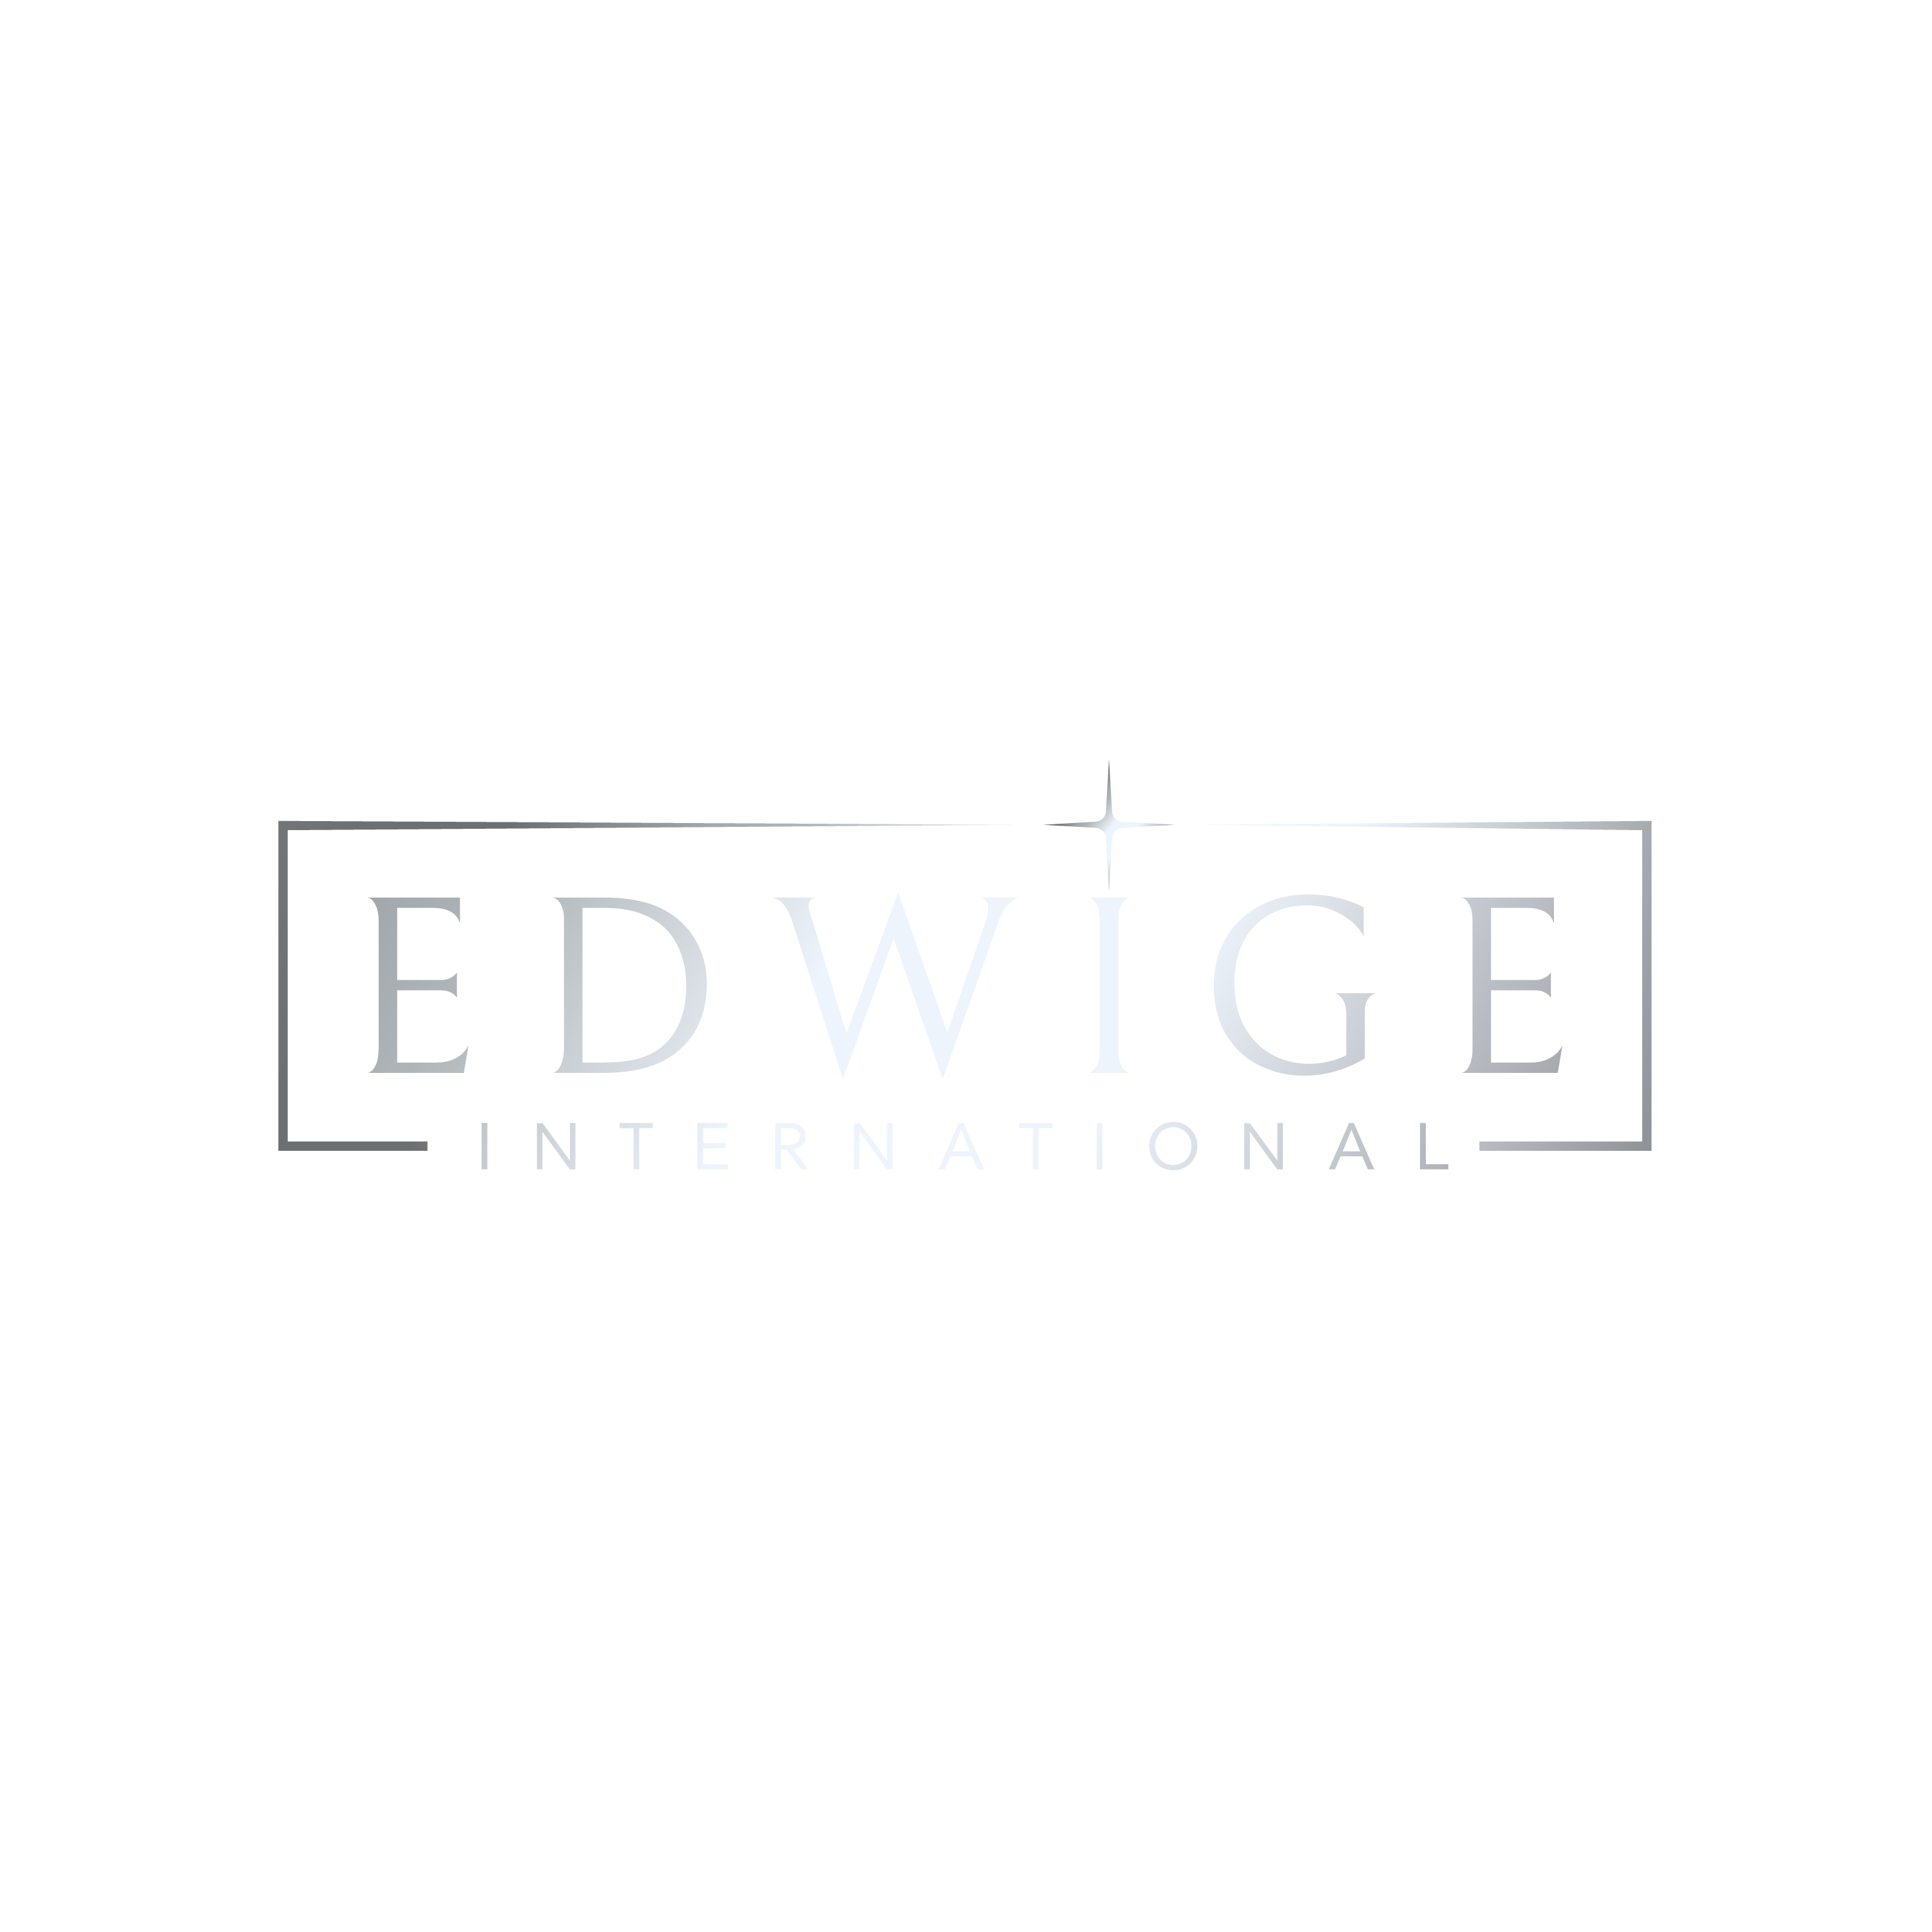 Edwige International Matchmaking Agency